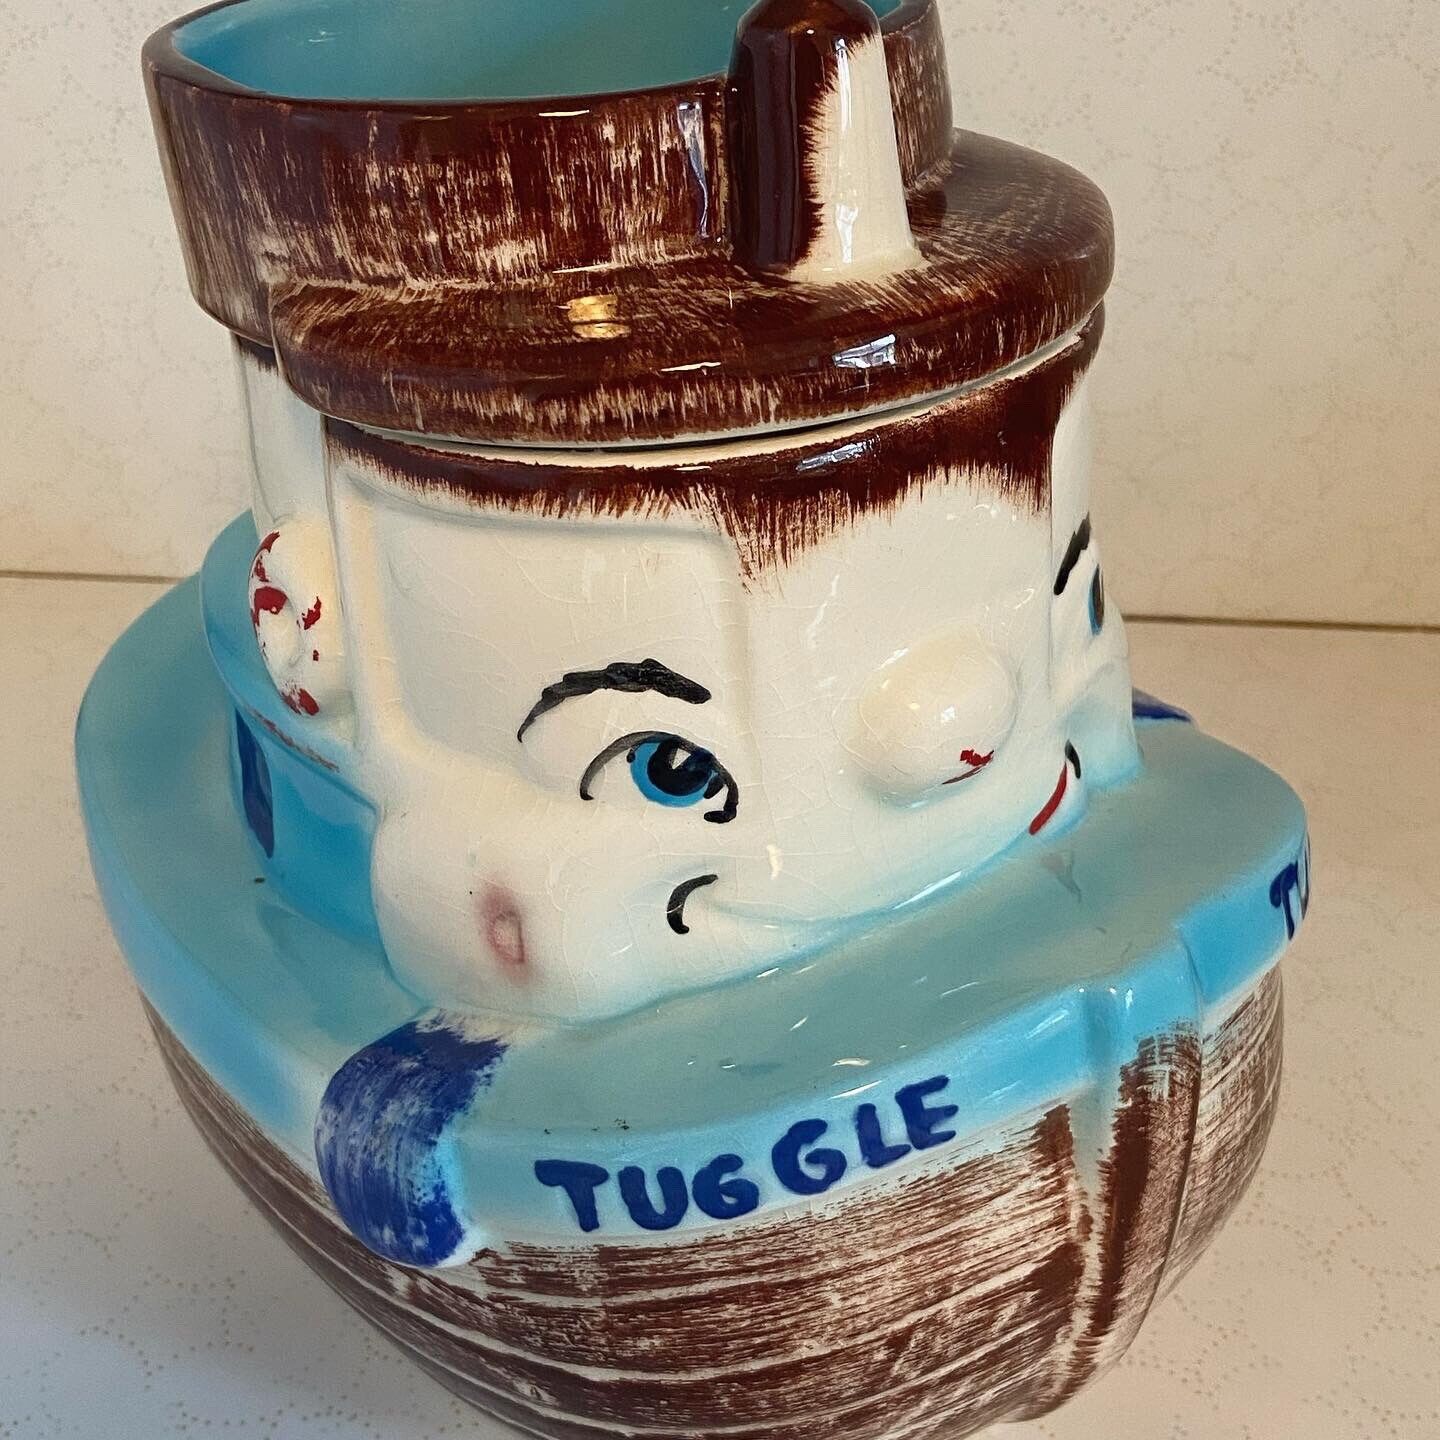 Vintage Tuggle the Tugboat Cookie Jar Sierra Vista California 1940s - 1950s